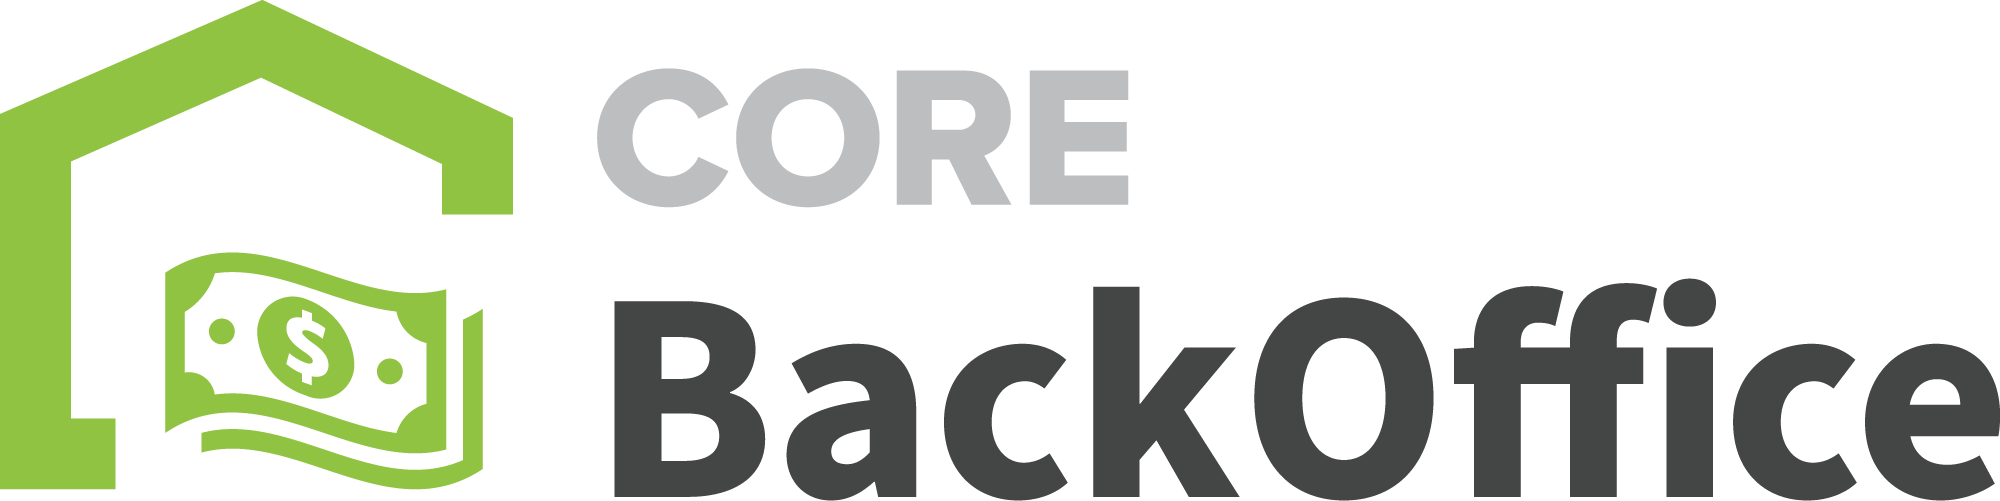 Core Back Office logo